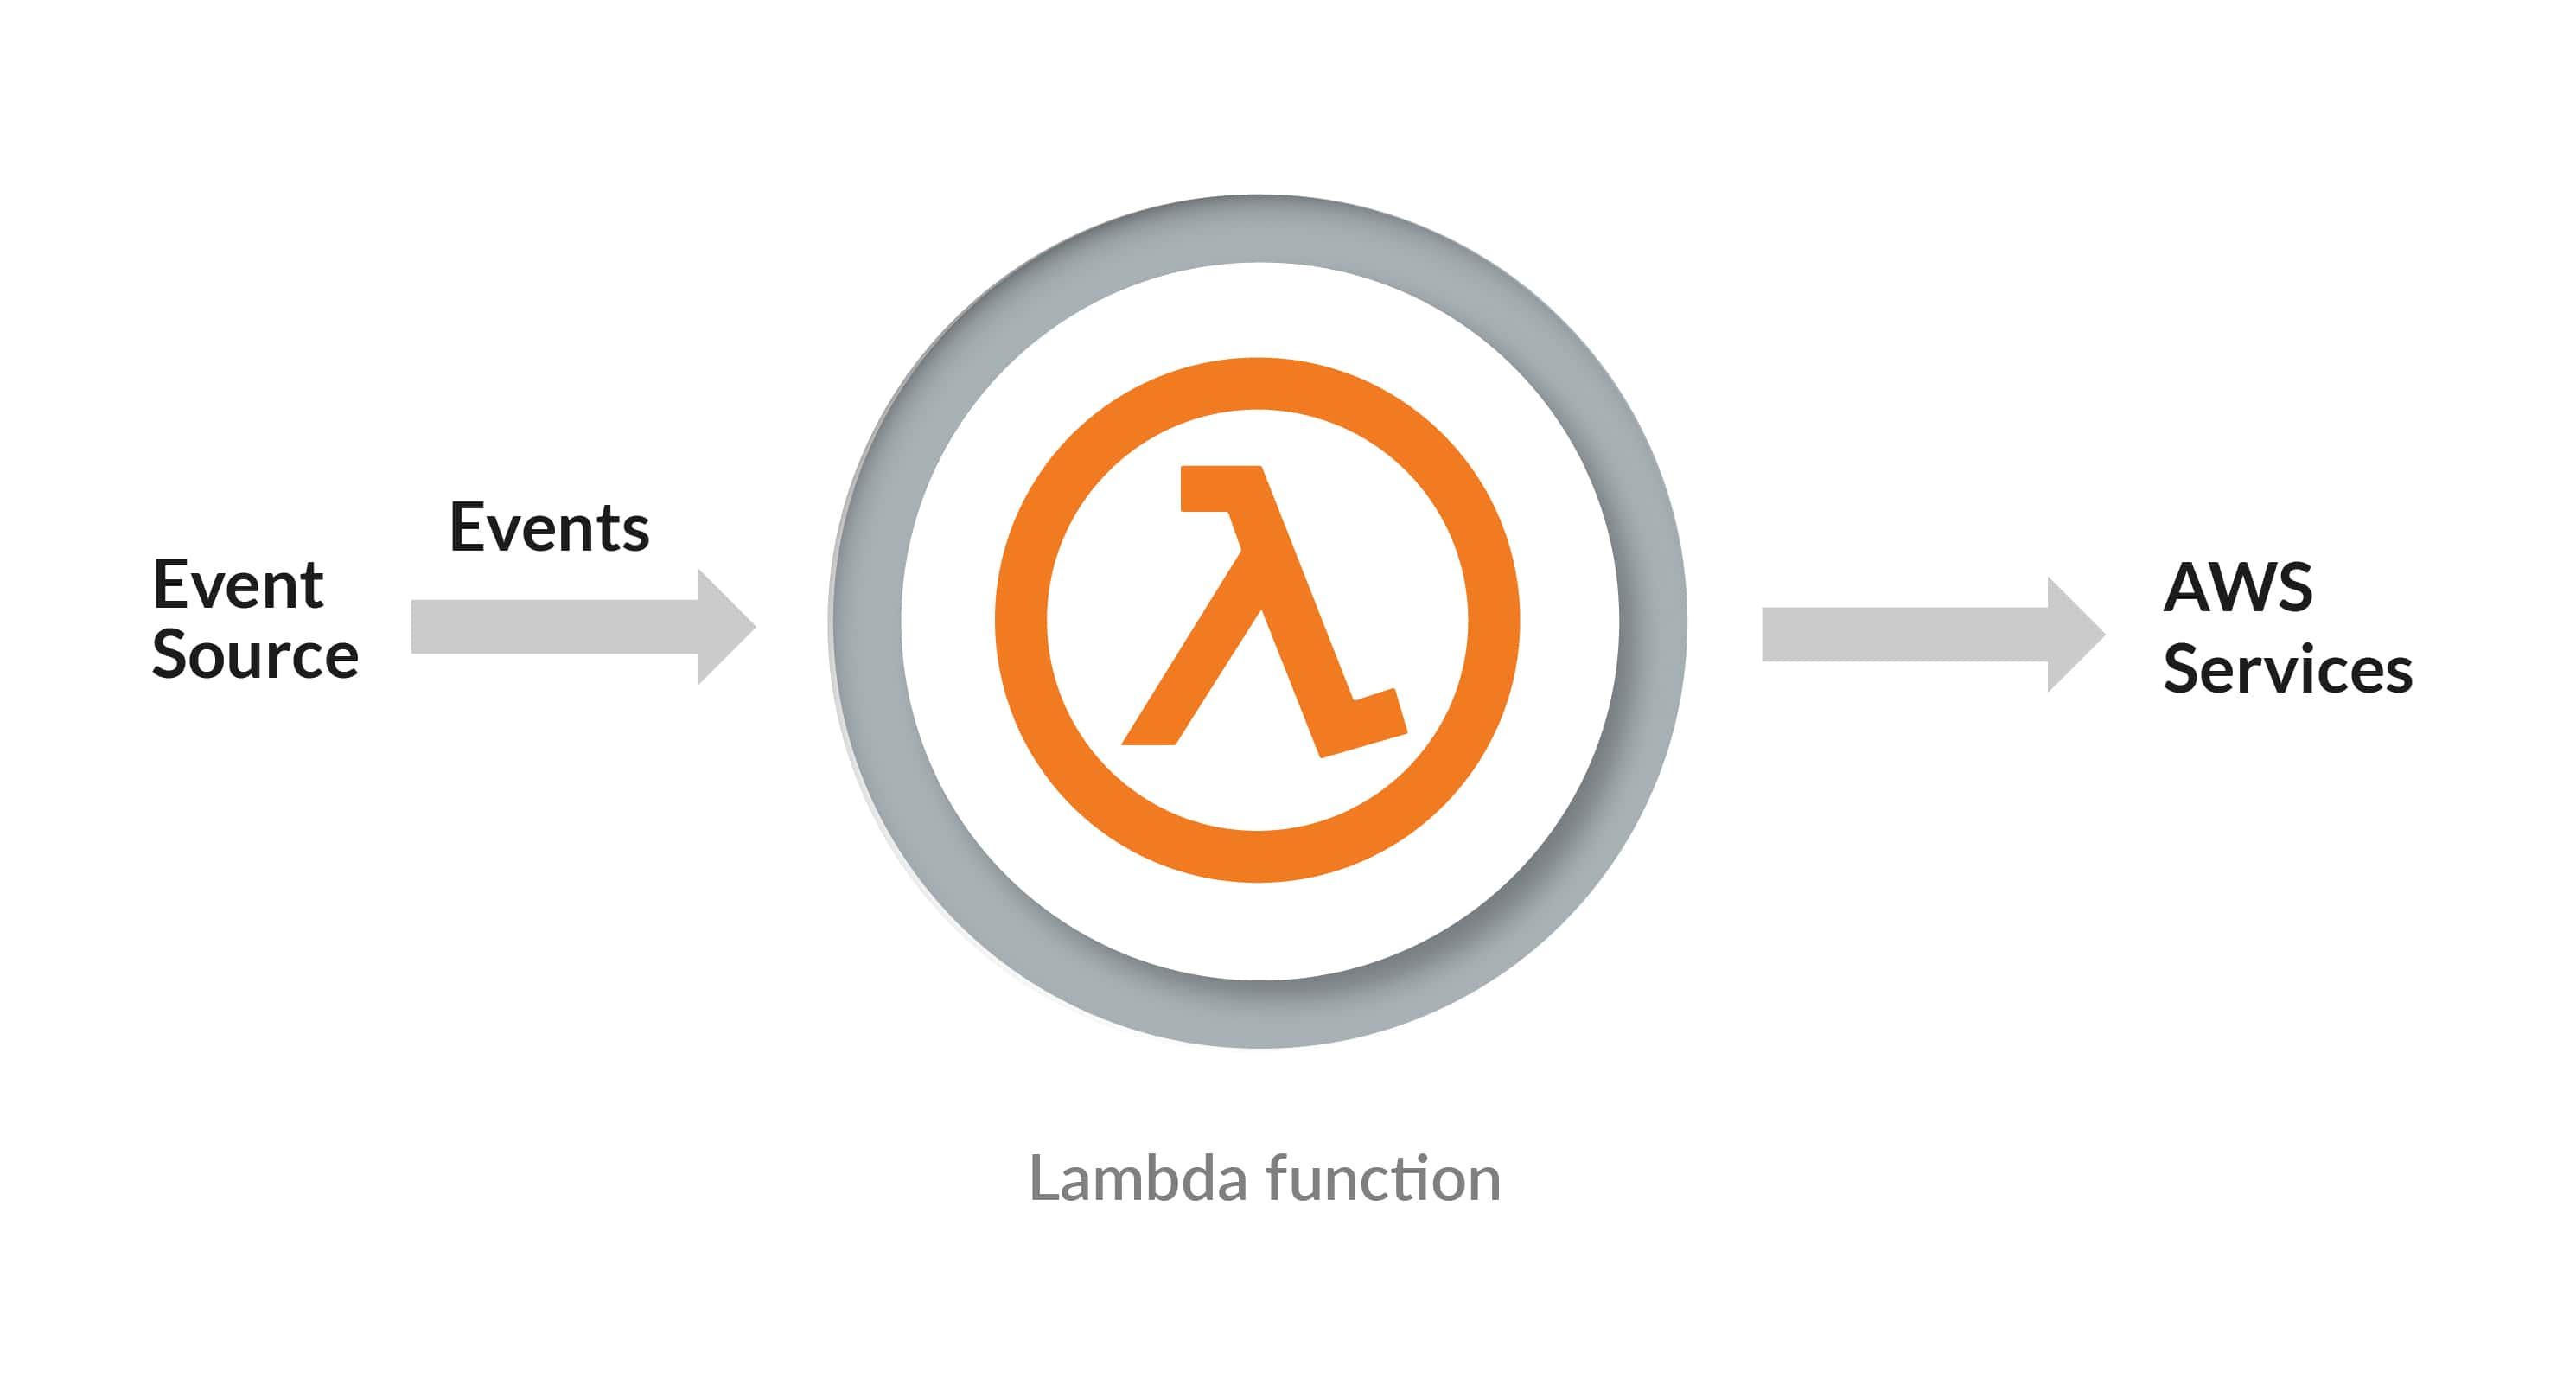 Running a Lambda function process